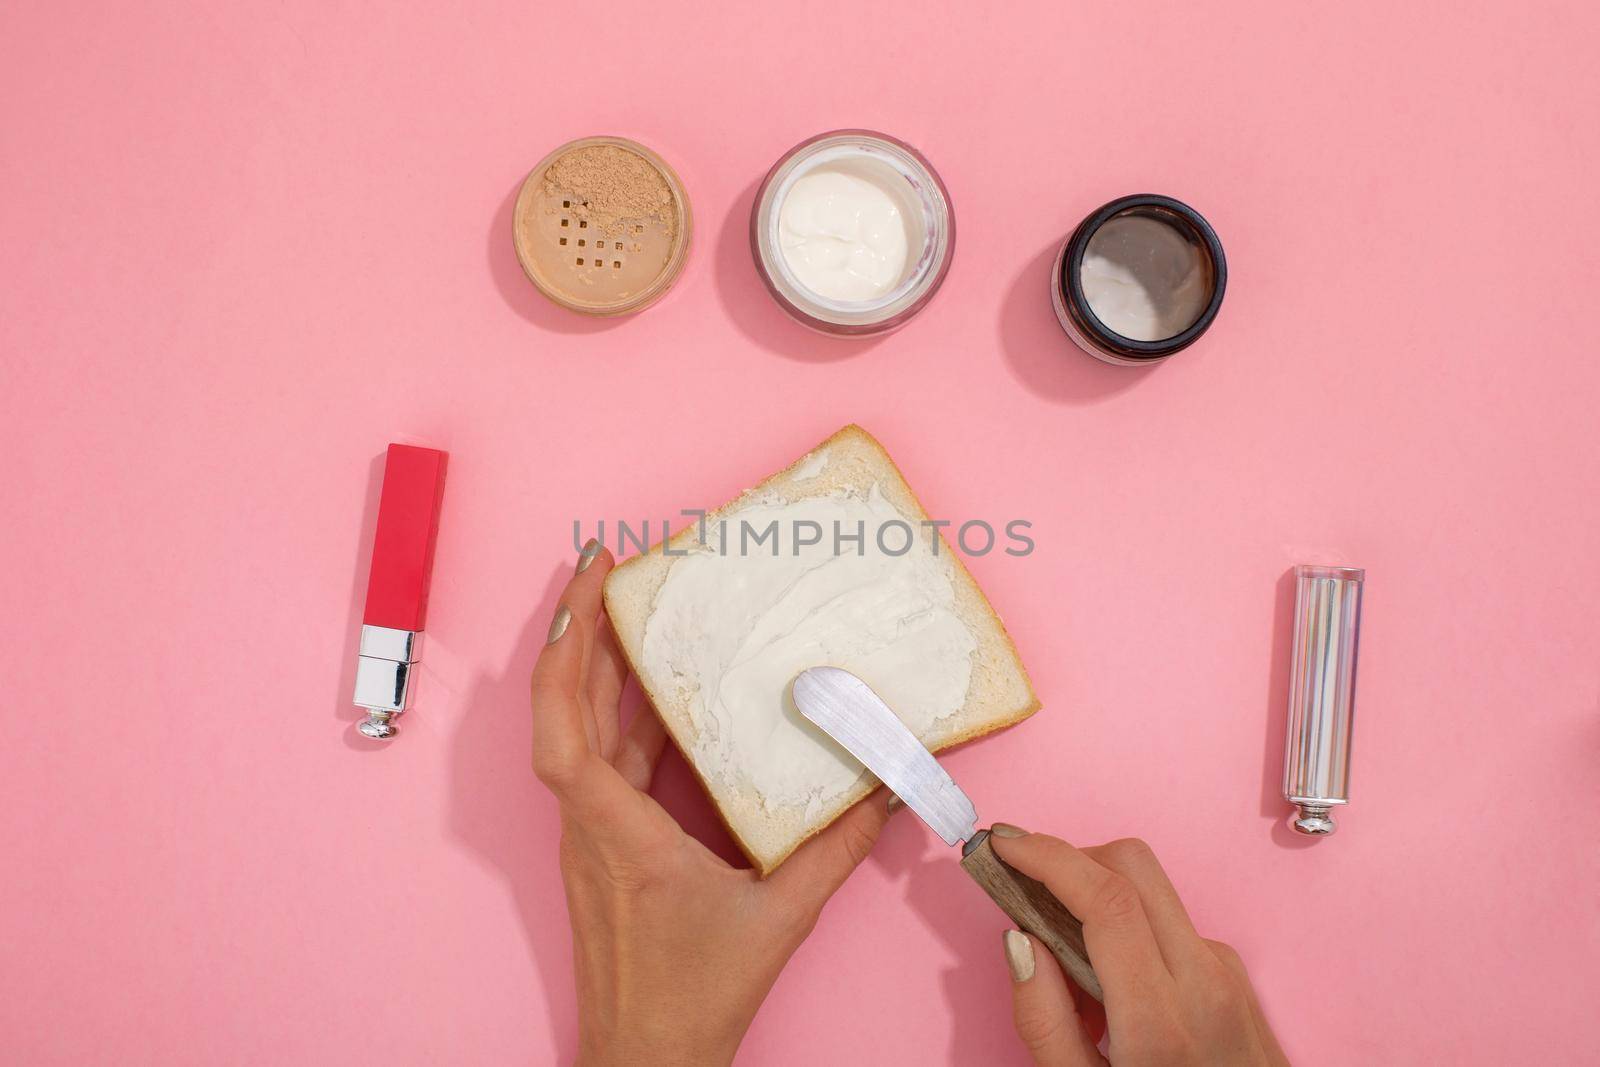 Hands smear cosmetic cream on bread by Demkat